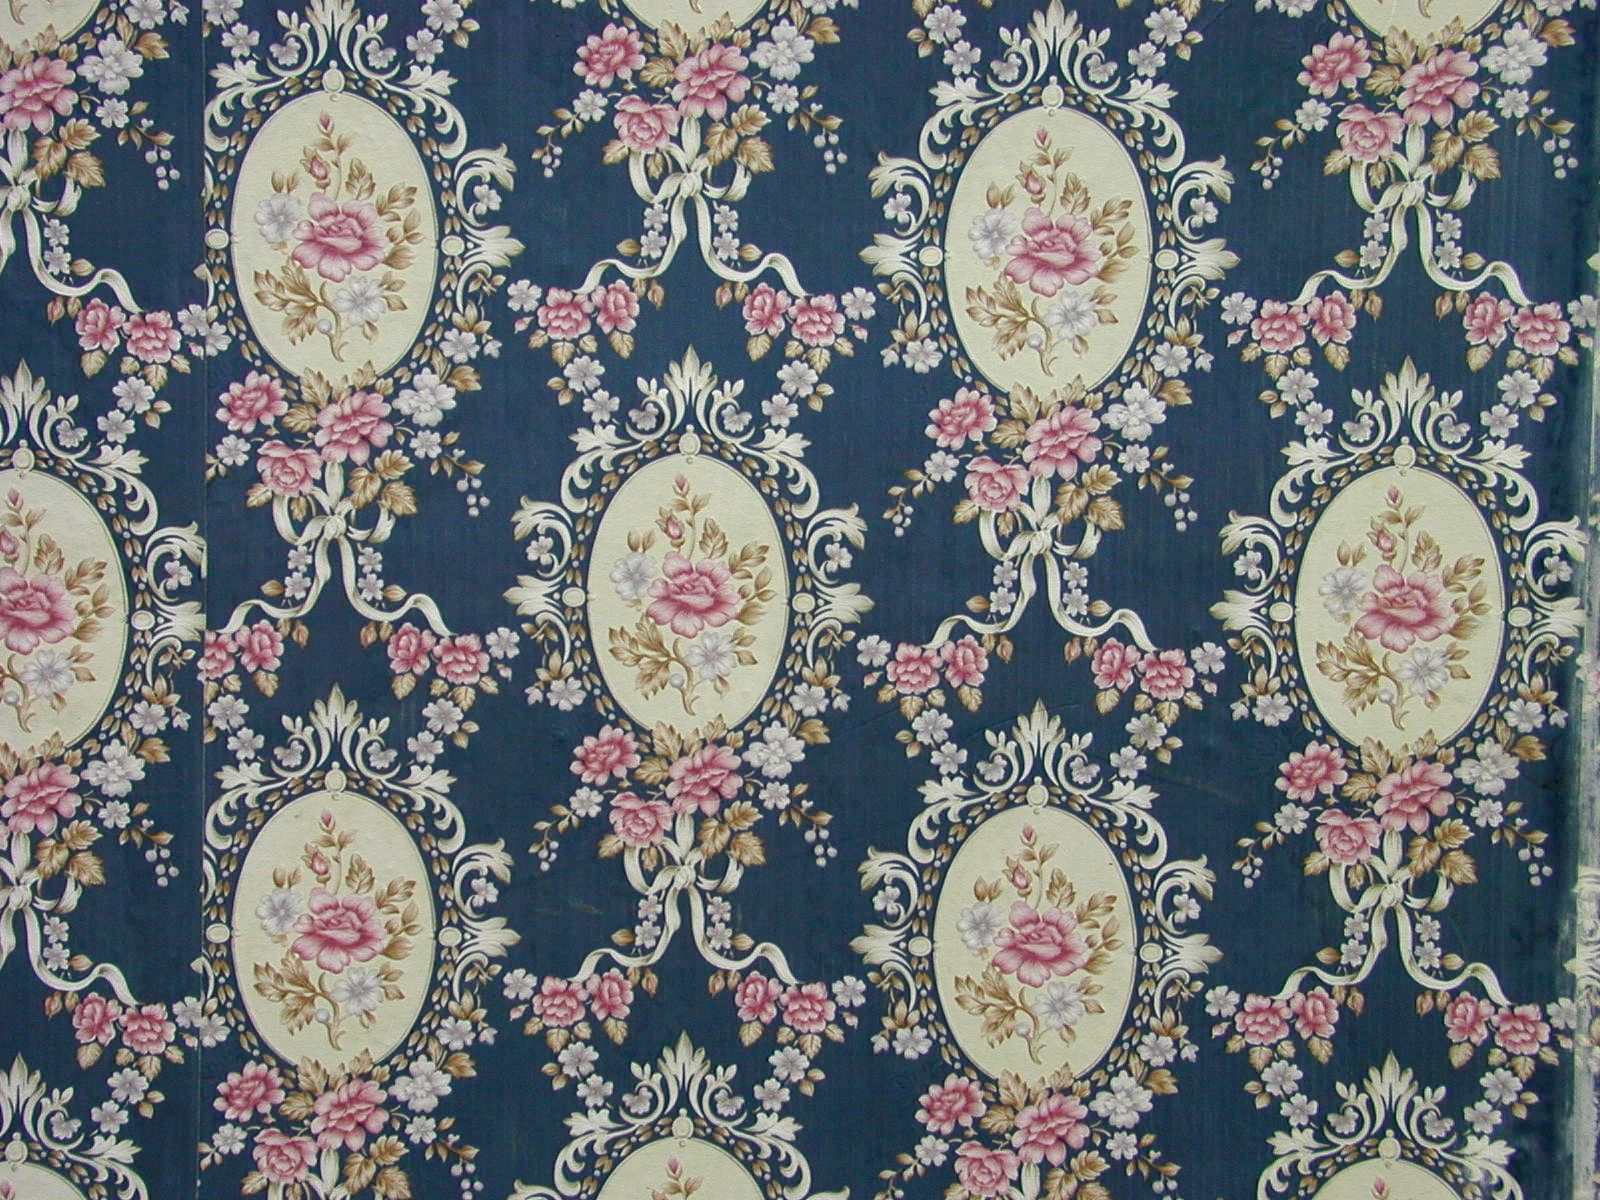 Victorian+wallpaper+pattern